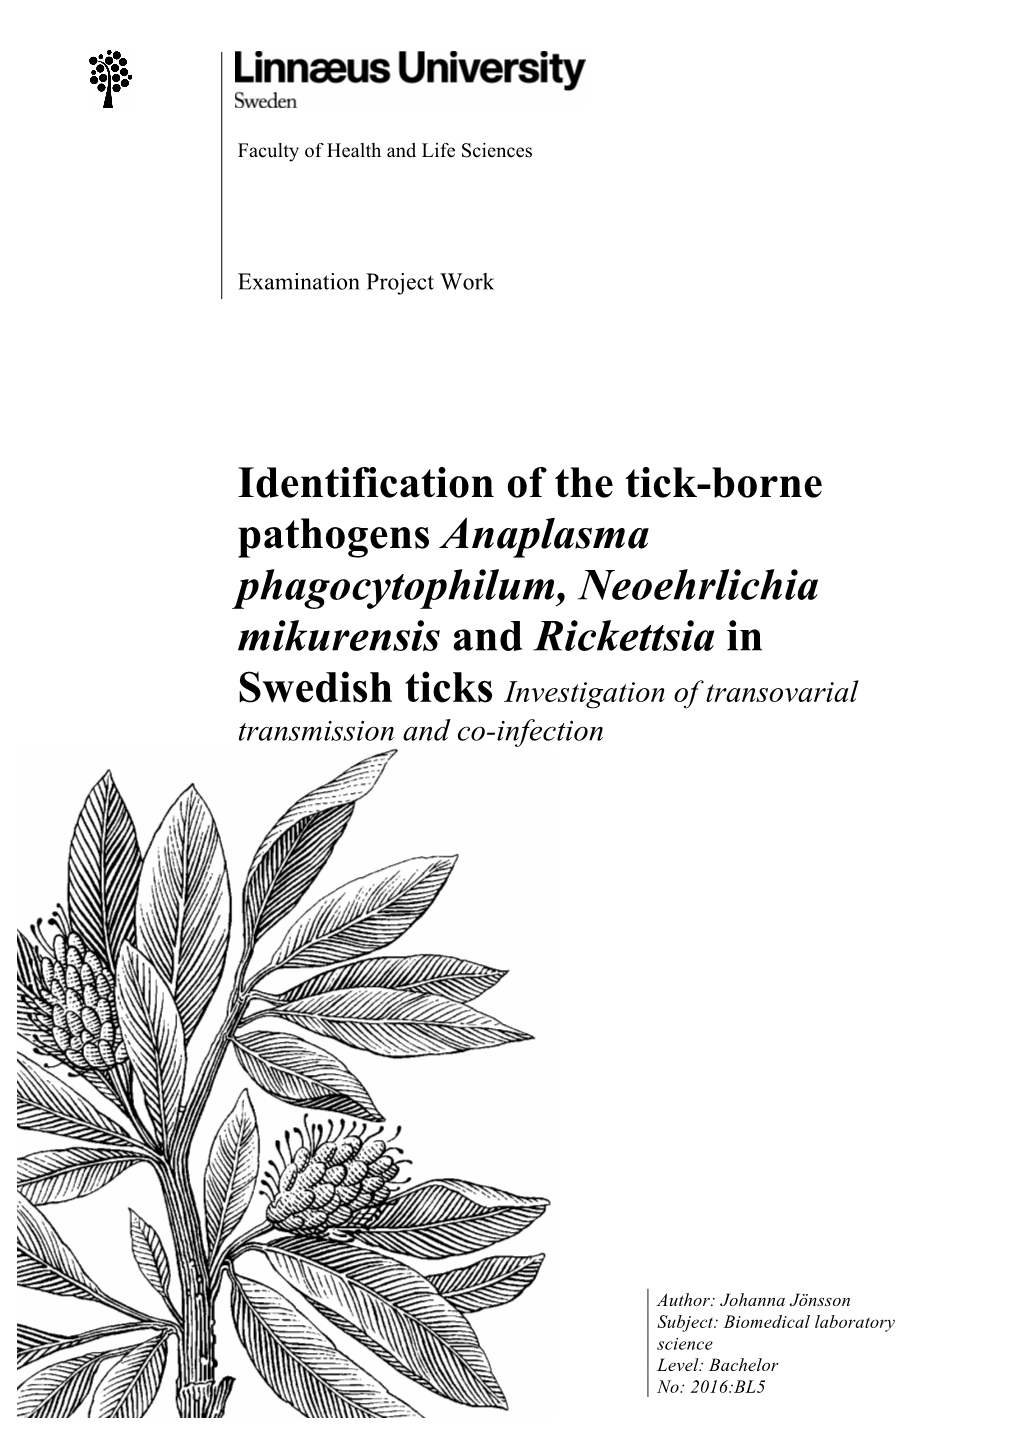 Identification of the Tick-Borne Pathogens Anaplasma